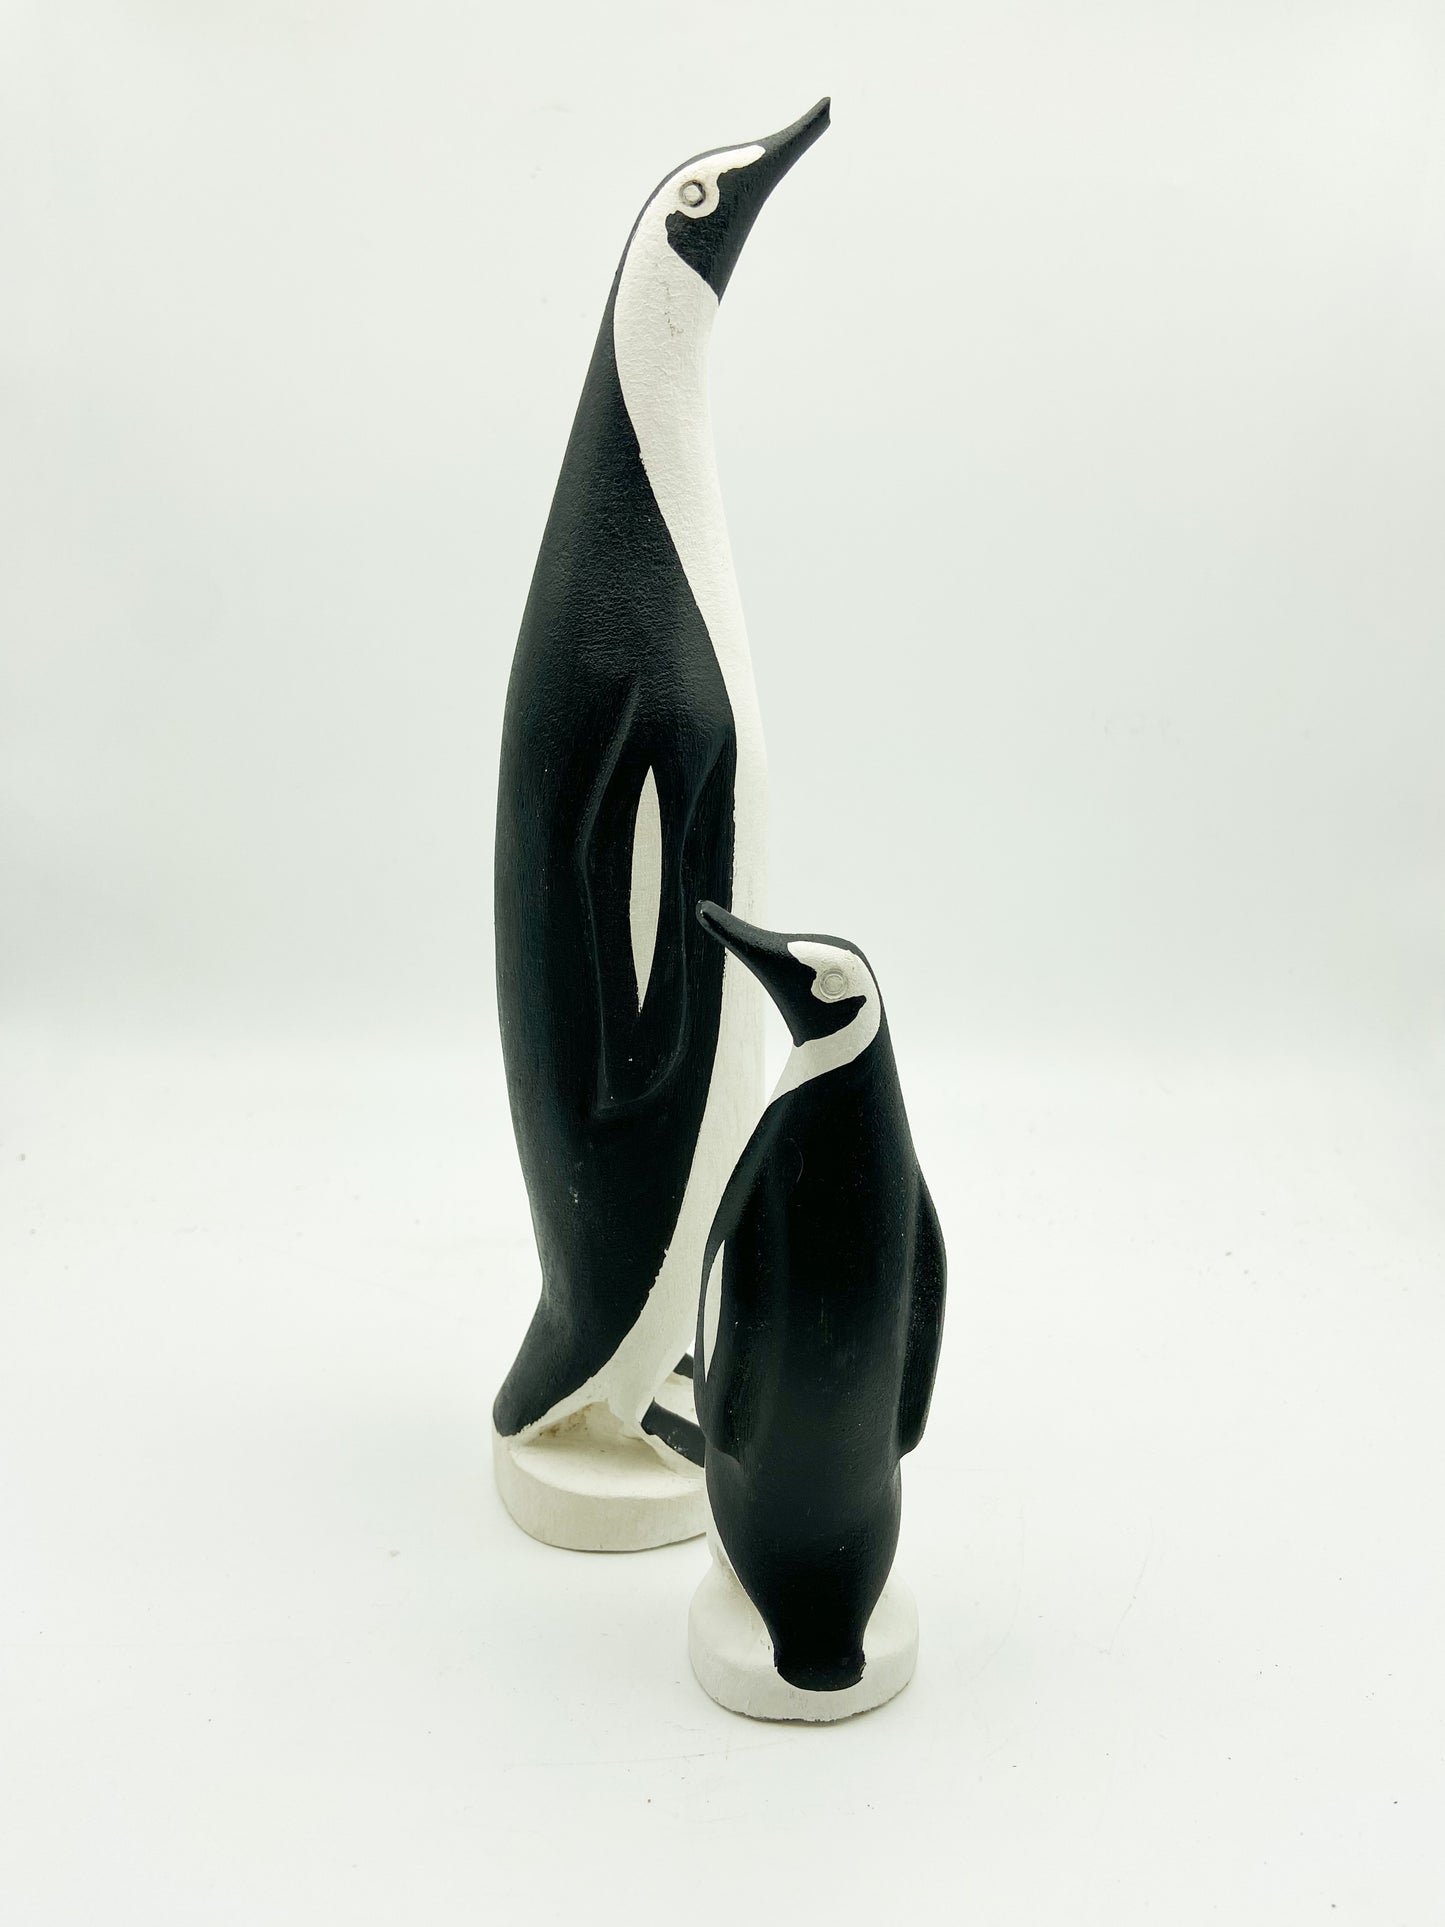 Wooden Penguin